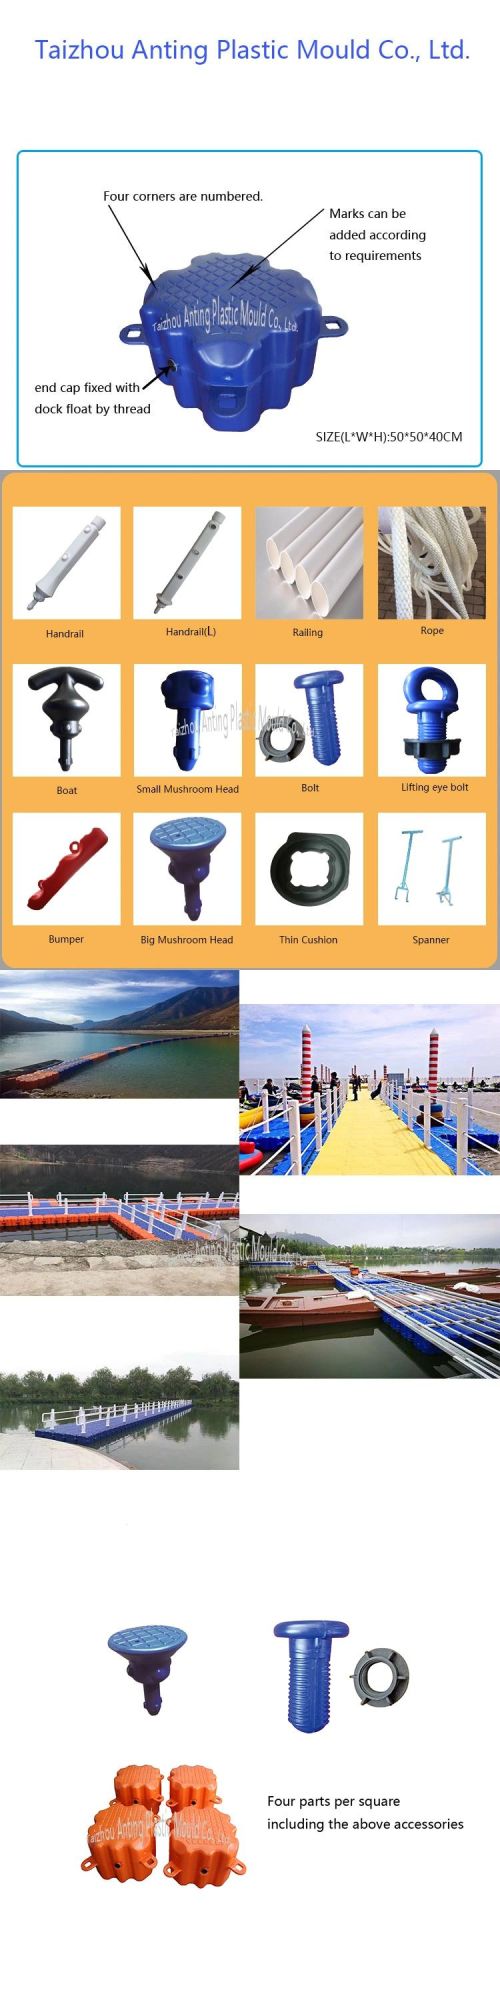 Accessories for Modular Floating Pontoon Dock as Floating Bridge